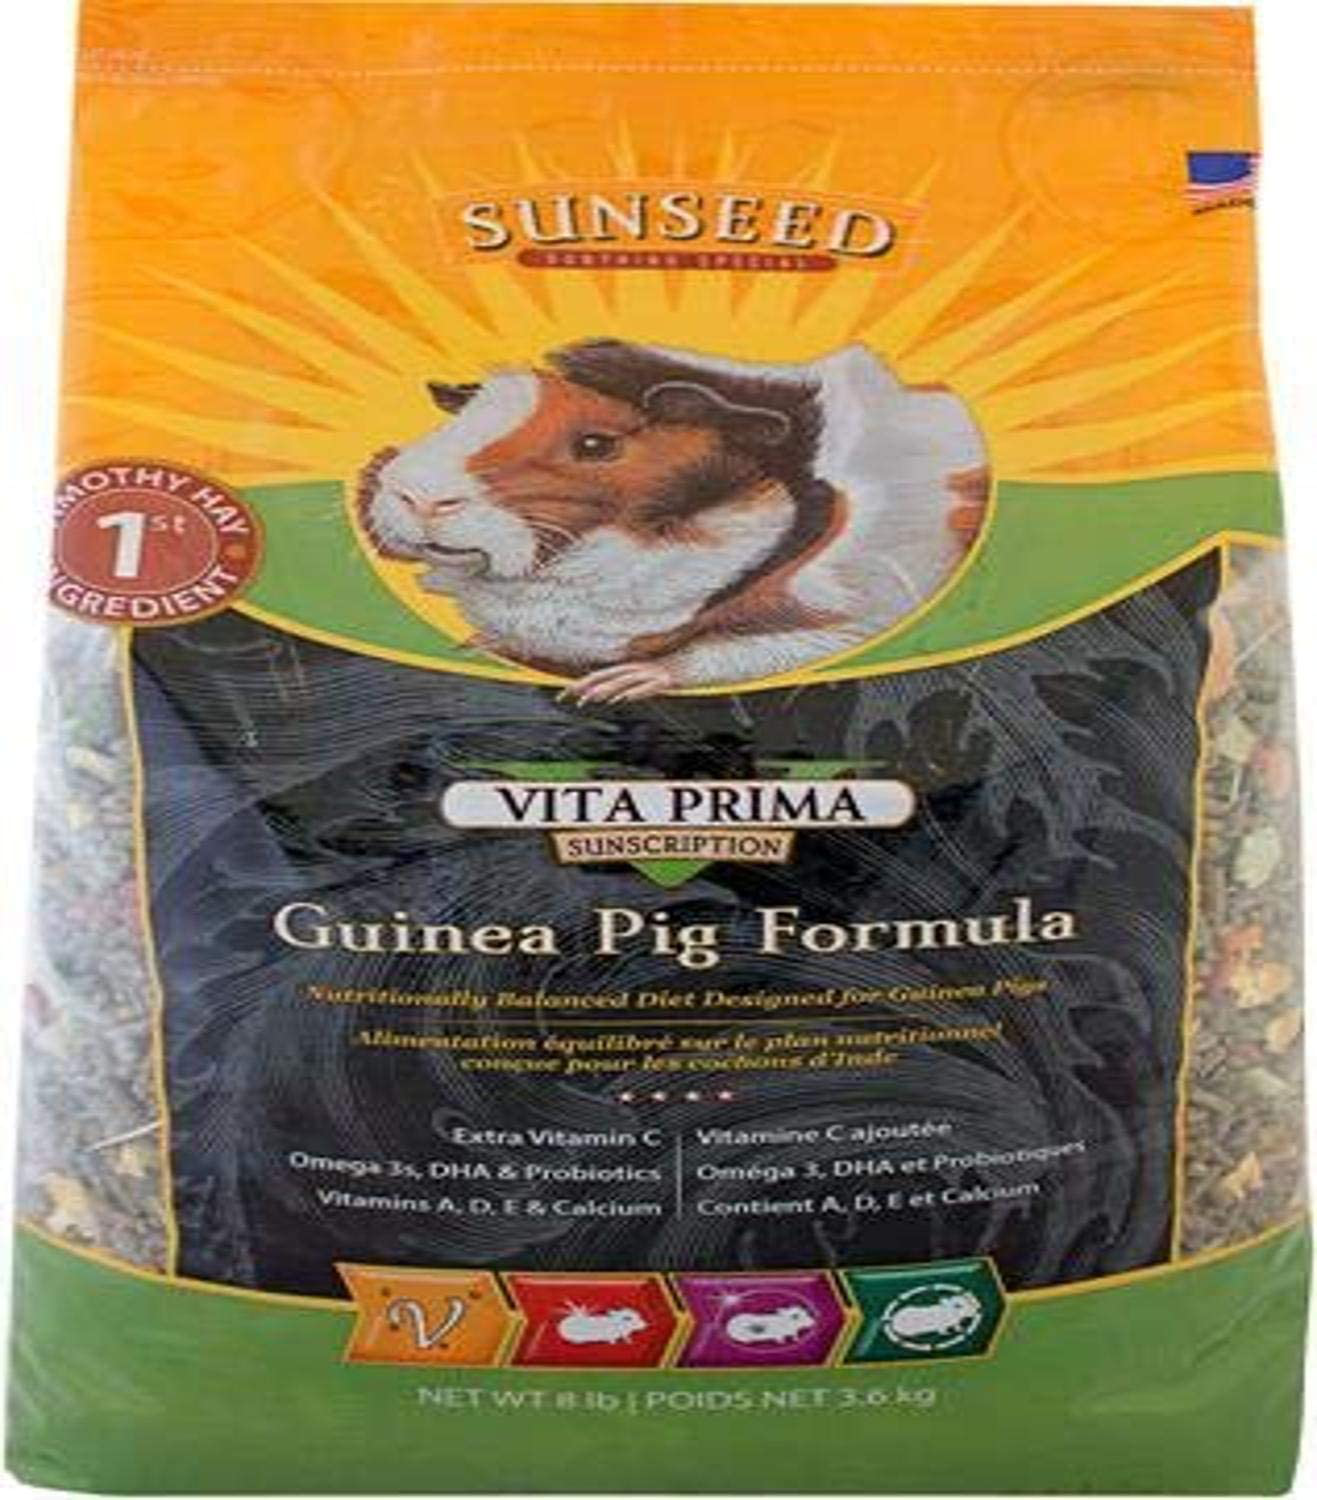 Sunseed 36038 Vita Prima Sunscription Guinea Pig Food - High Fiber Timothy Formula, 8 LBS